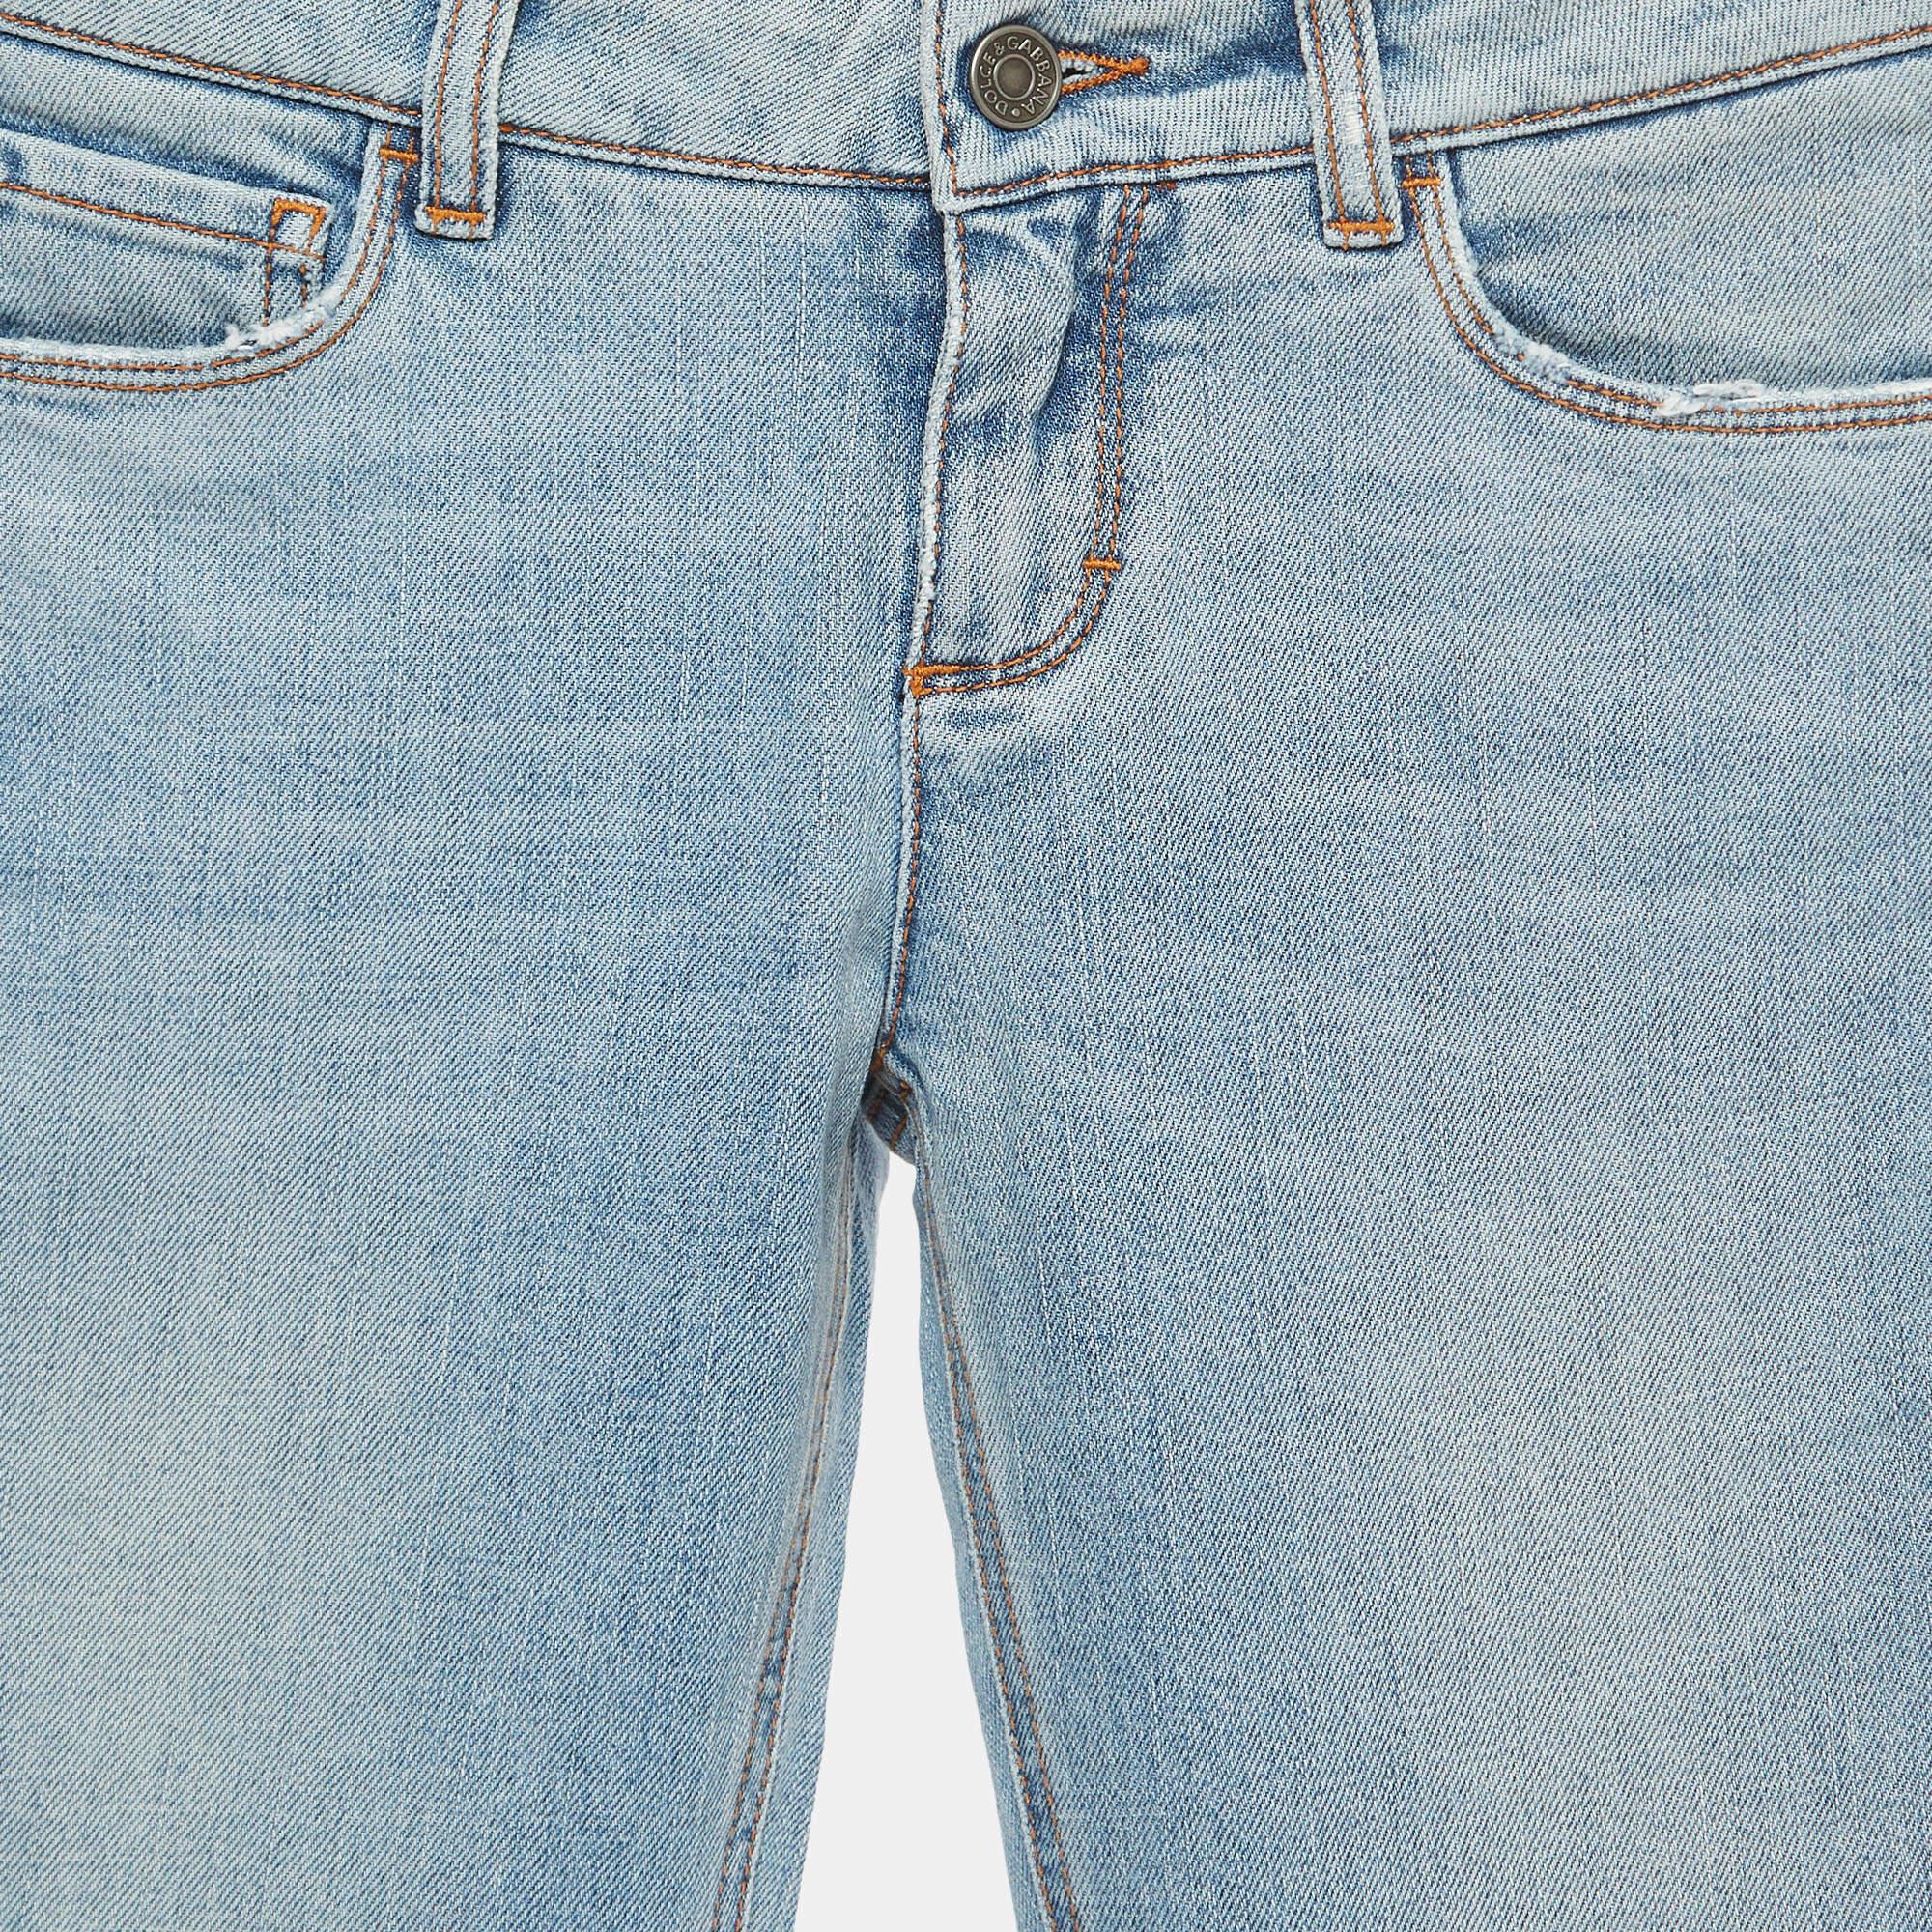 Dolce & Gabbana Blue Washed Distressed Denim Skinny Jeans S Waist 26